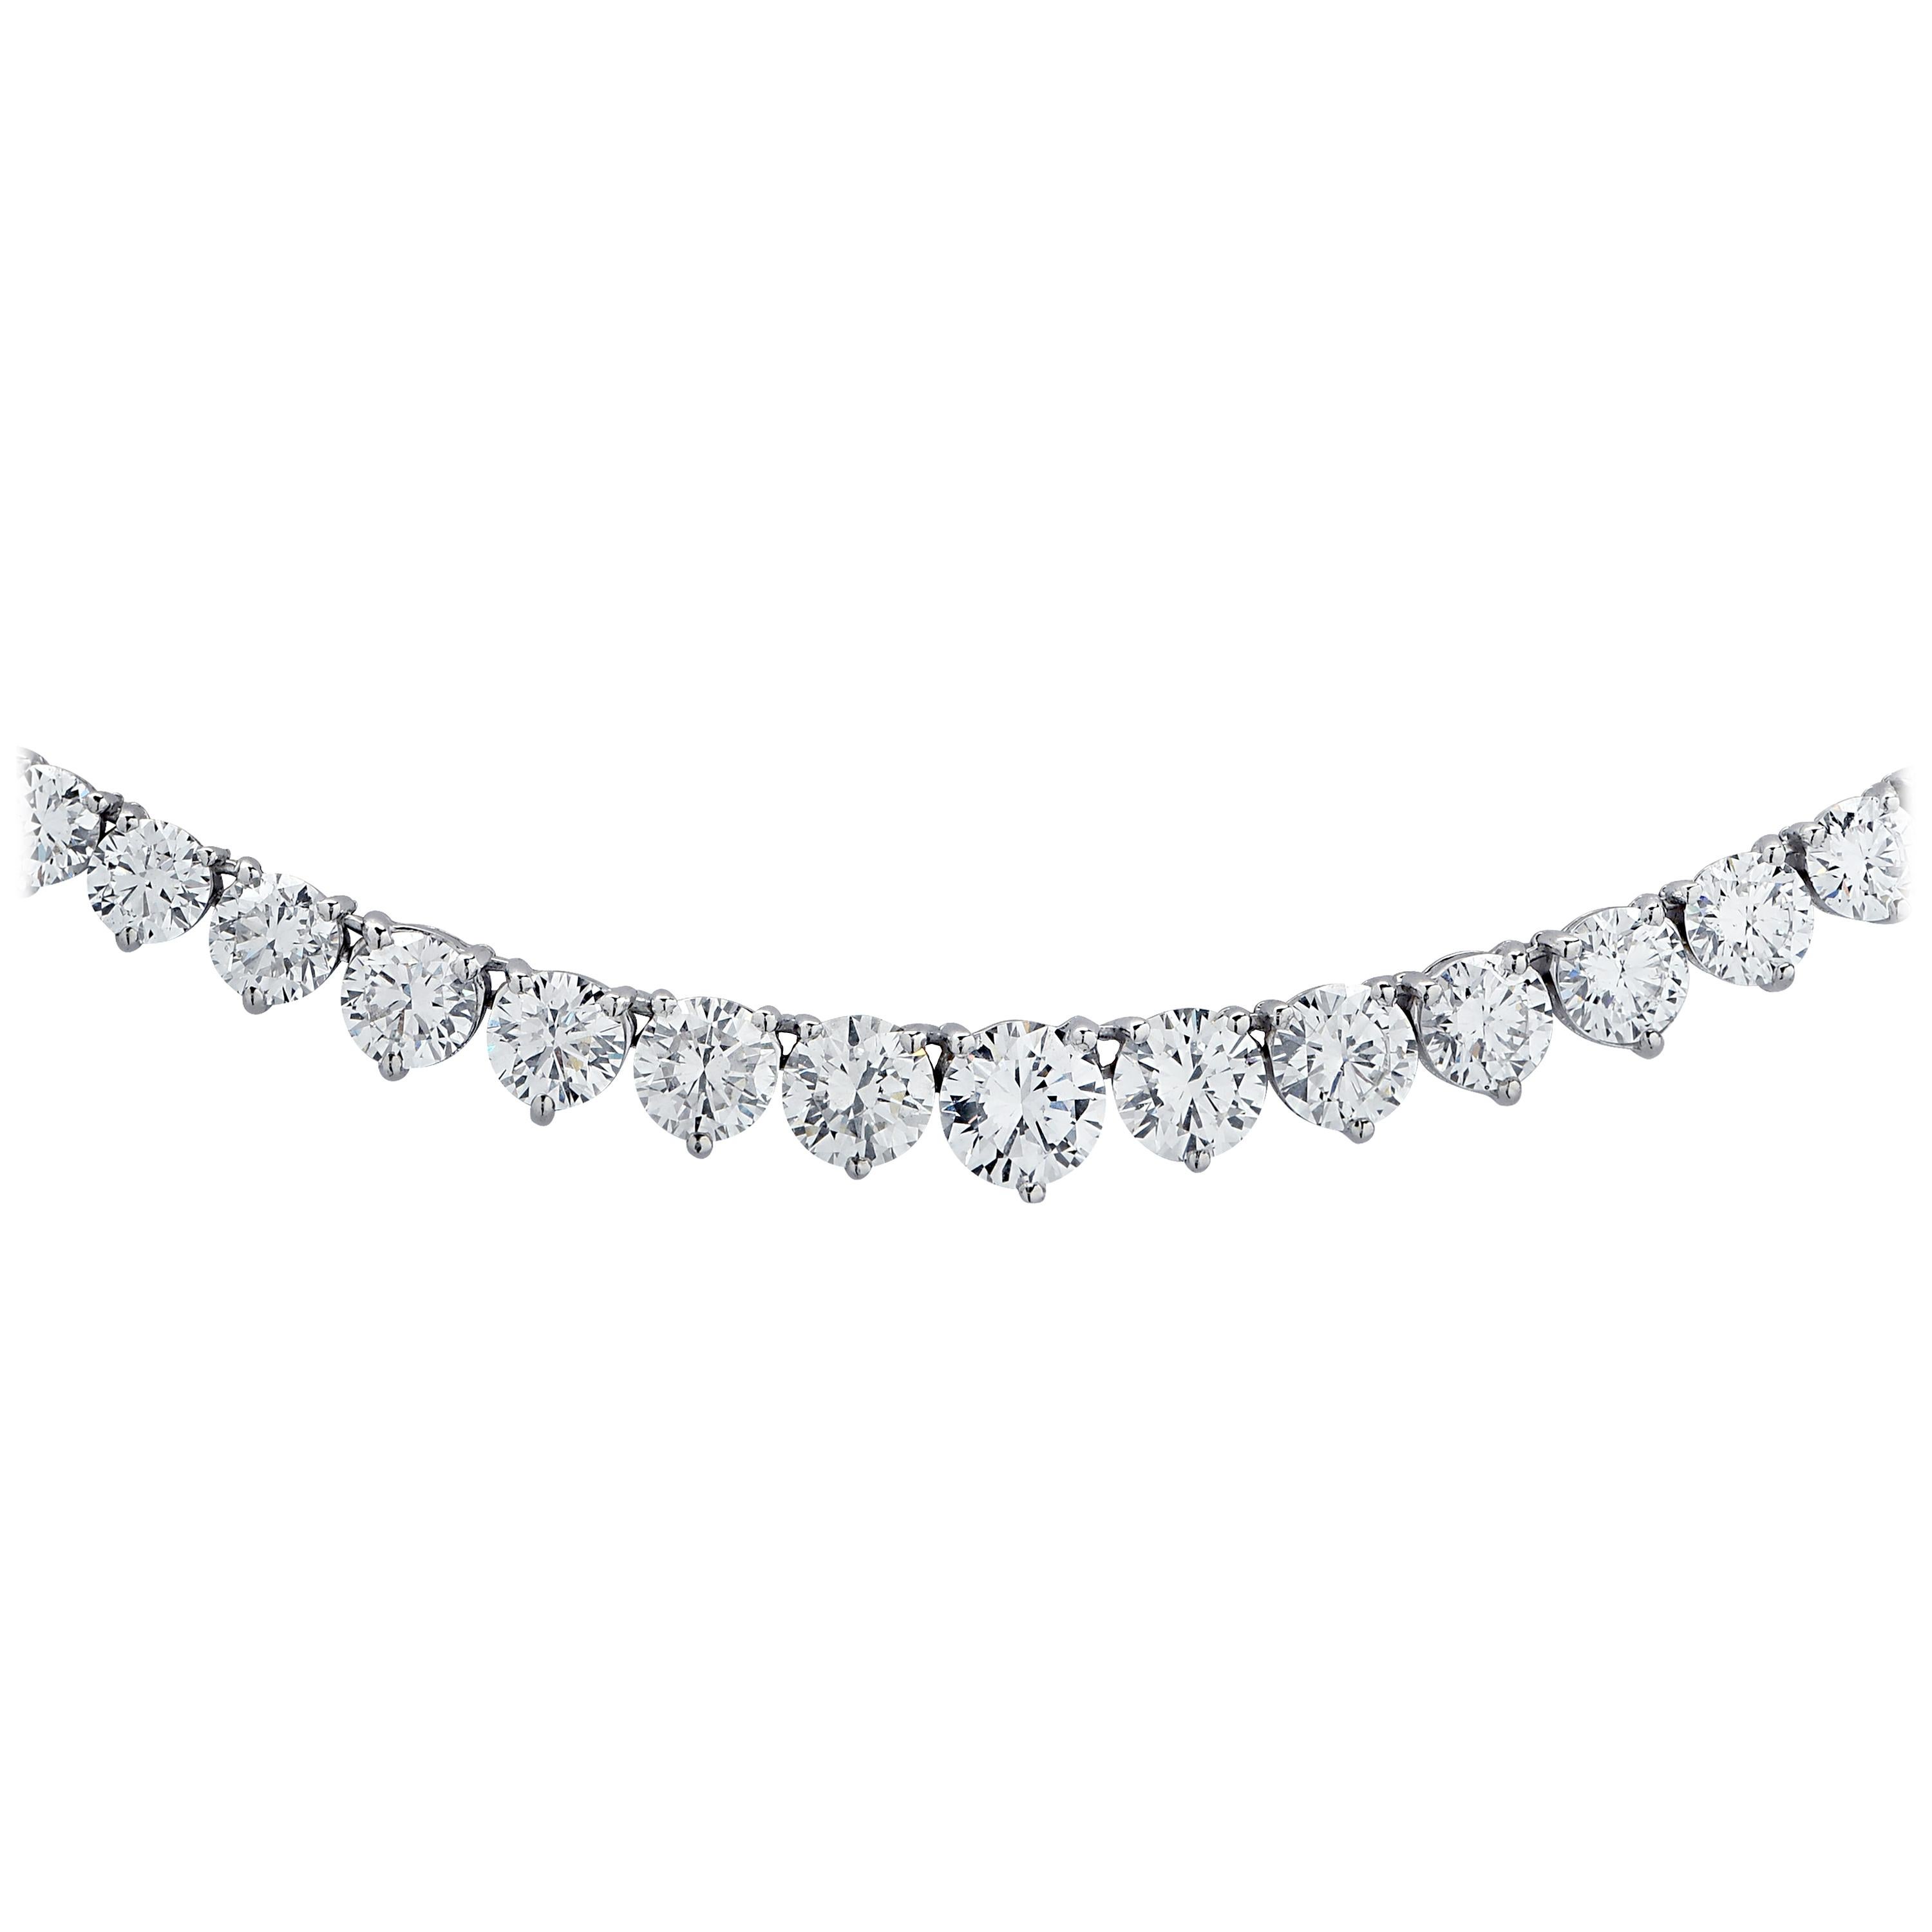 Vivid Diamonds 18 Carat Diamond Riviere Necklace